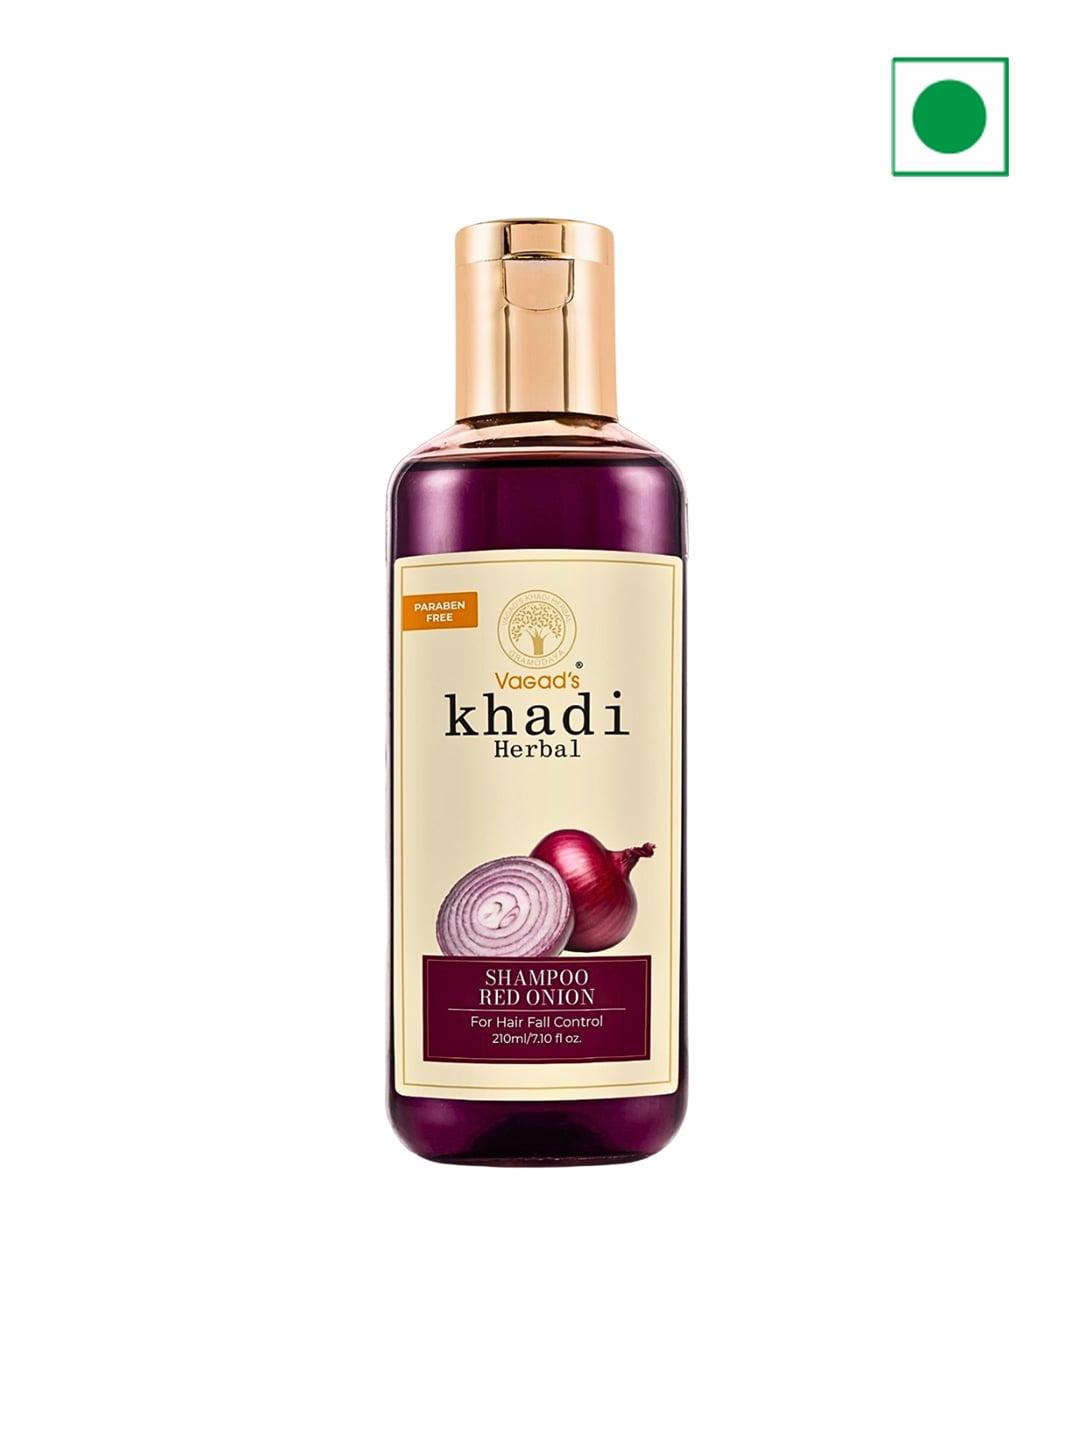 vagads-khadi-herbal-red-onion-shampoo-with-aloevera---210-ml